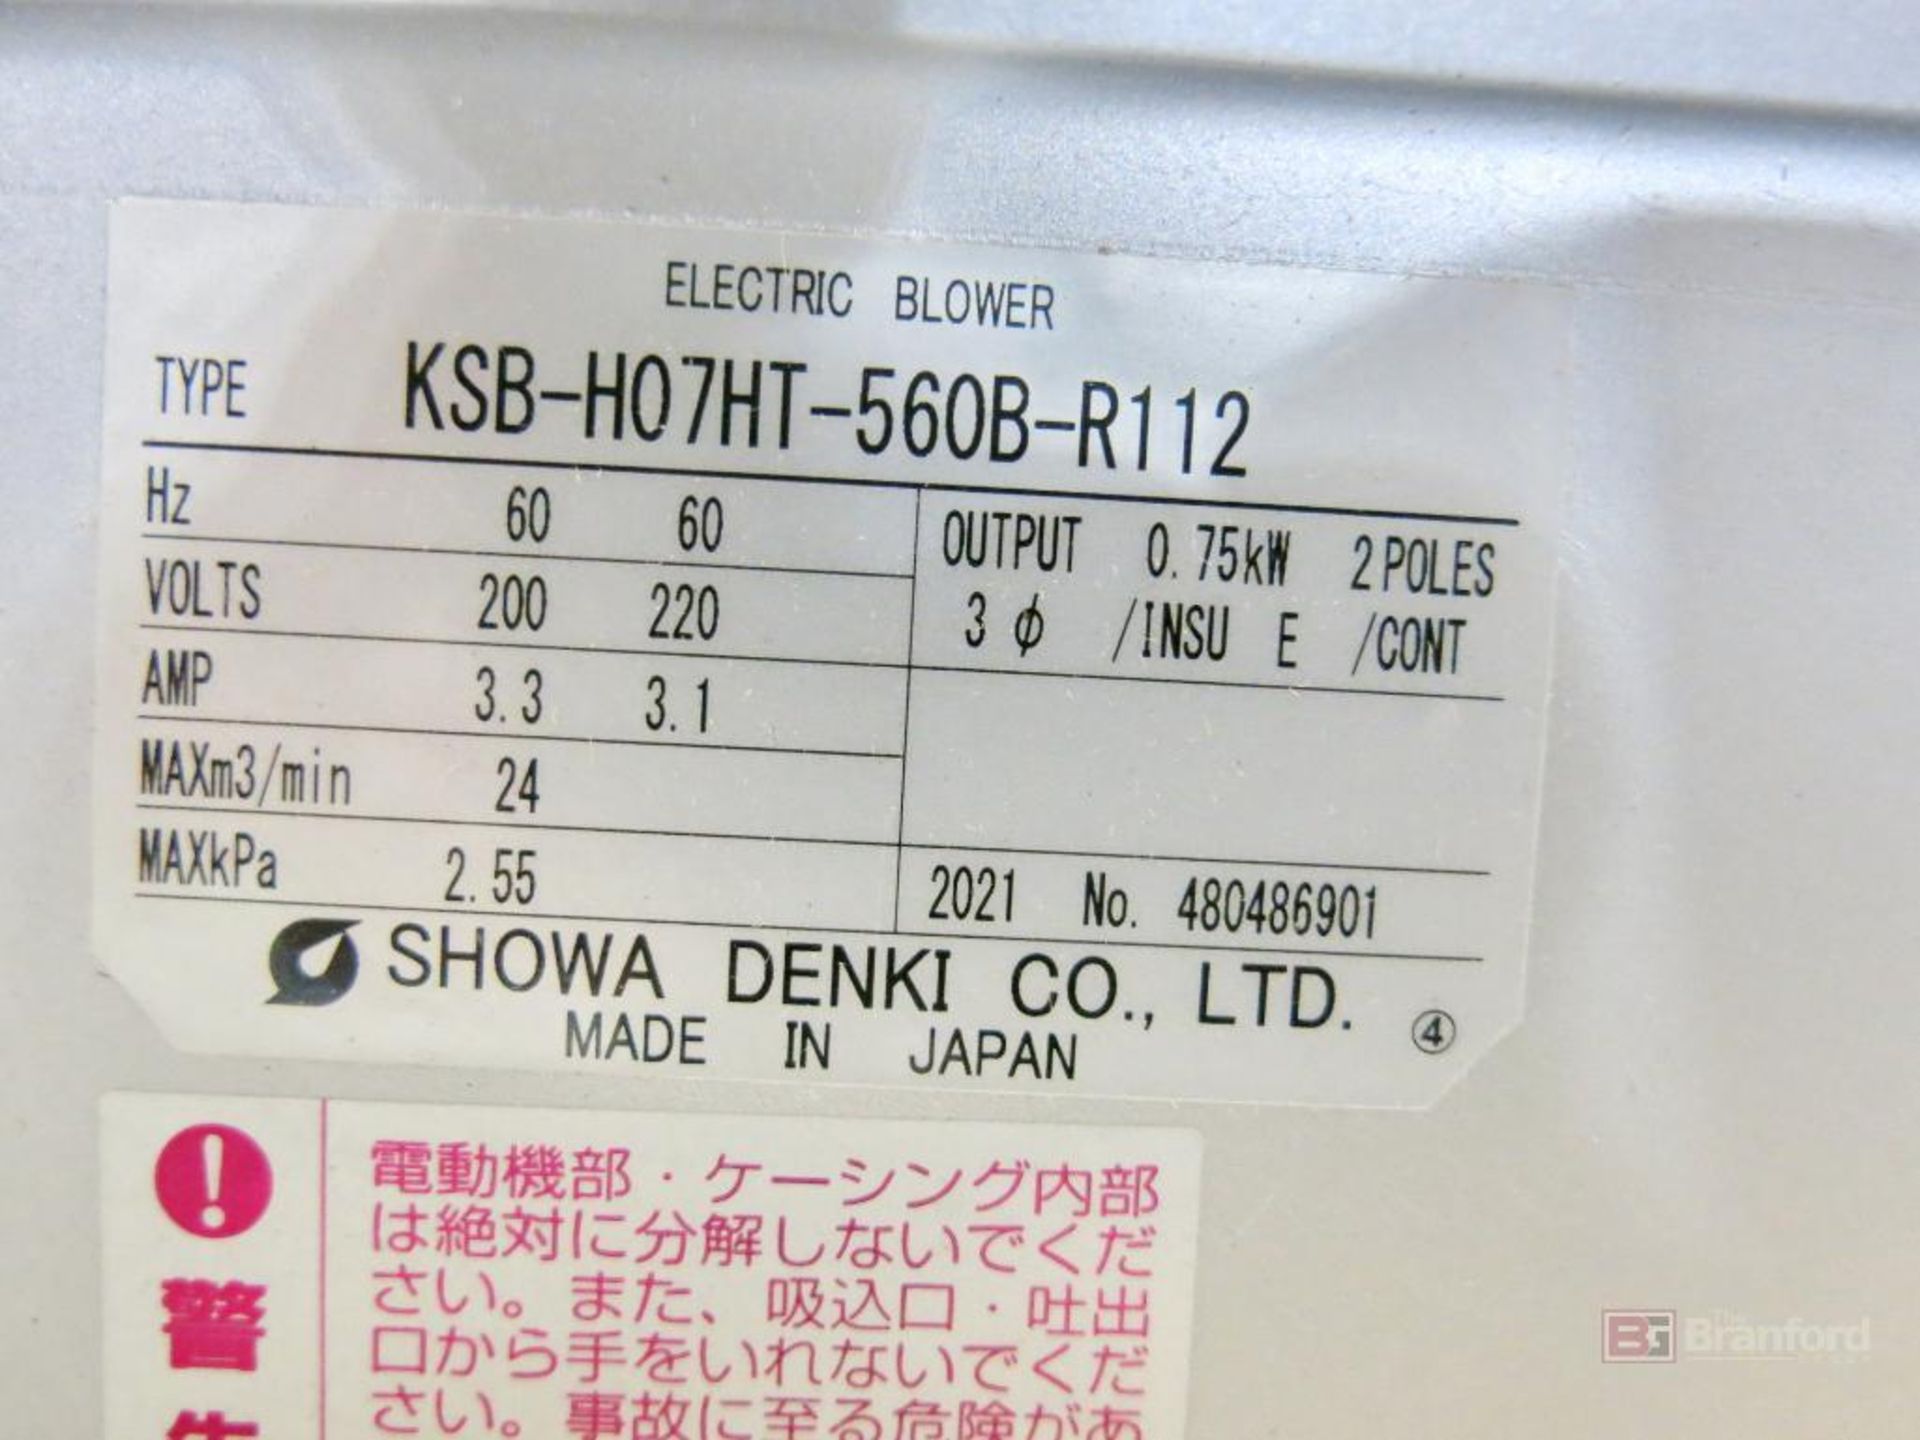 Showa Denki Group Model HE2H-70XP-B13 Electric Blower - Image 3 of 3